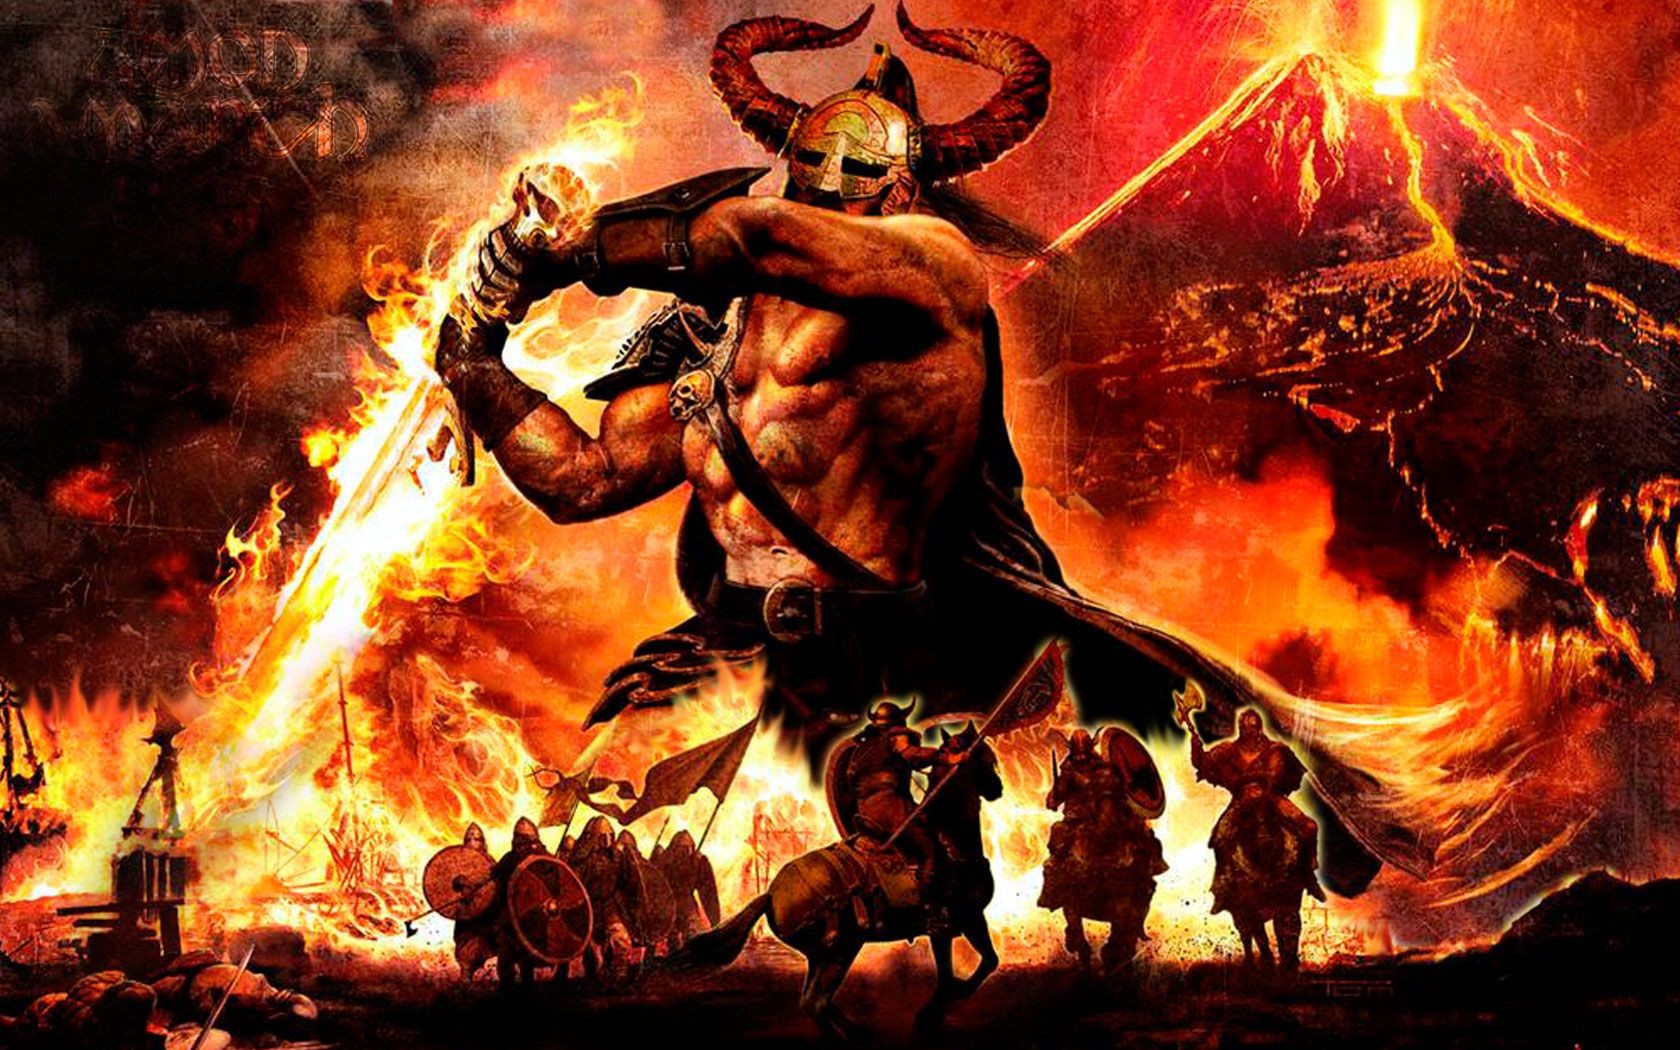 warrior, Amon Amarth, Melodic death metal, Vikings, Battle, Fantasy Battle, Digital art, Fantasy art, Death metal, Viking metal, Viking death metal, Medieval Wallpaper